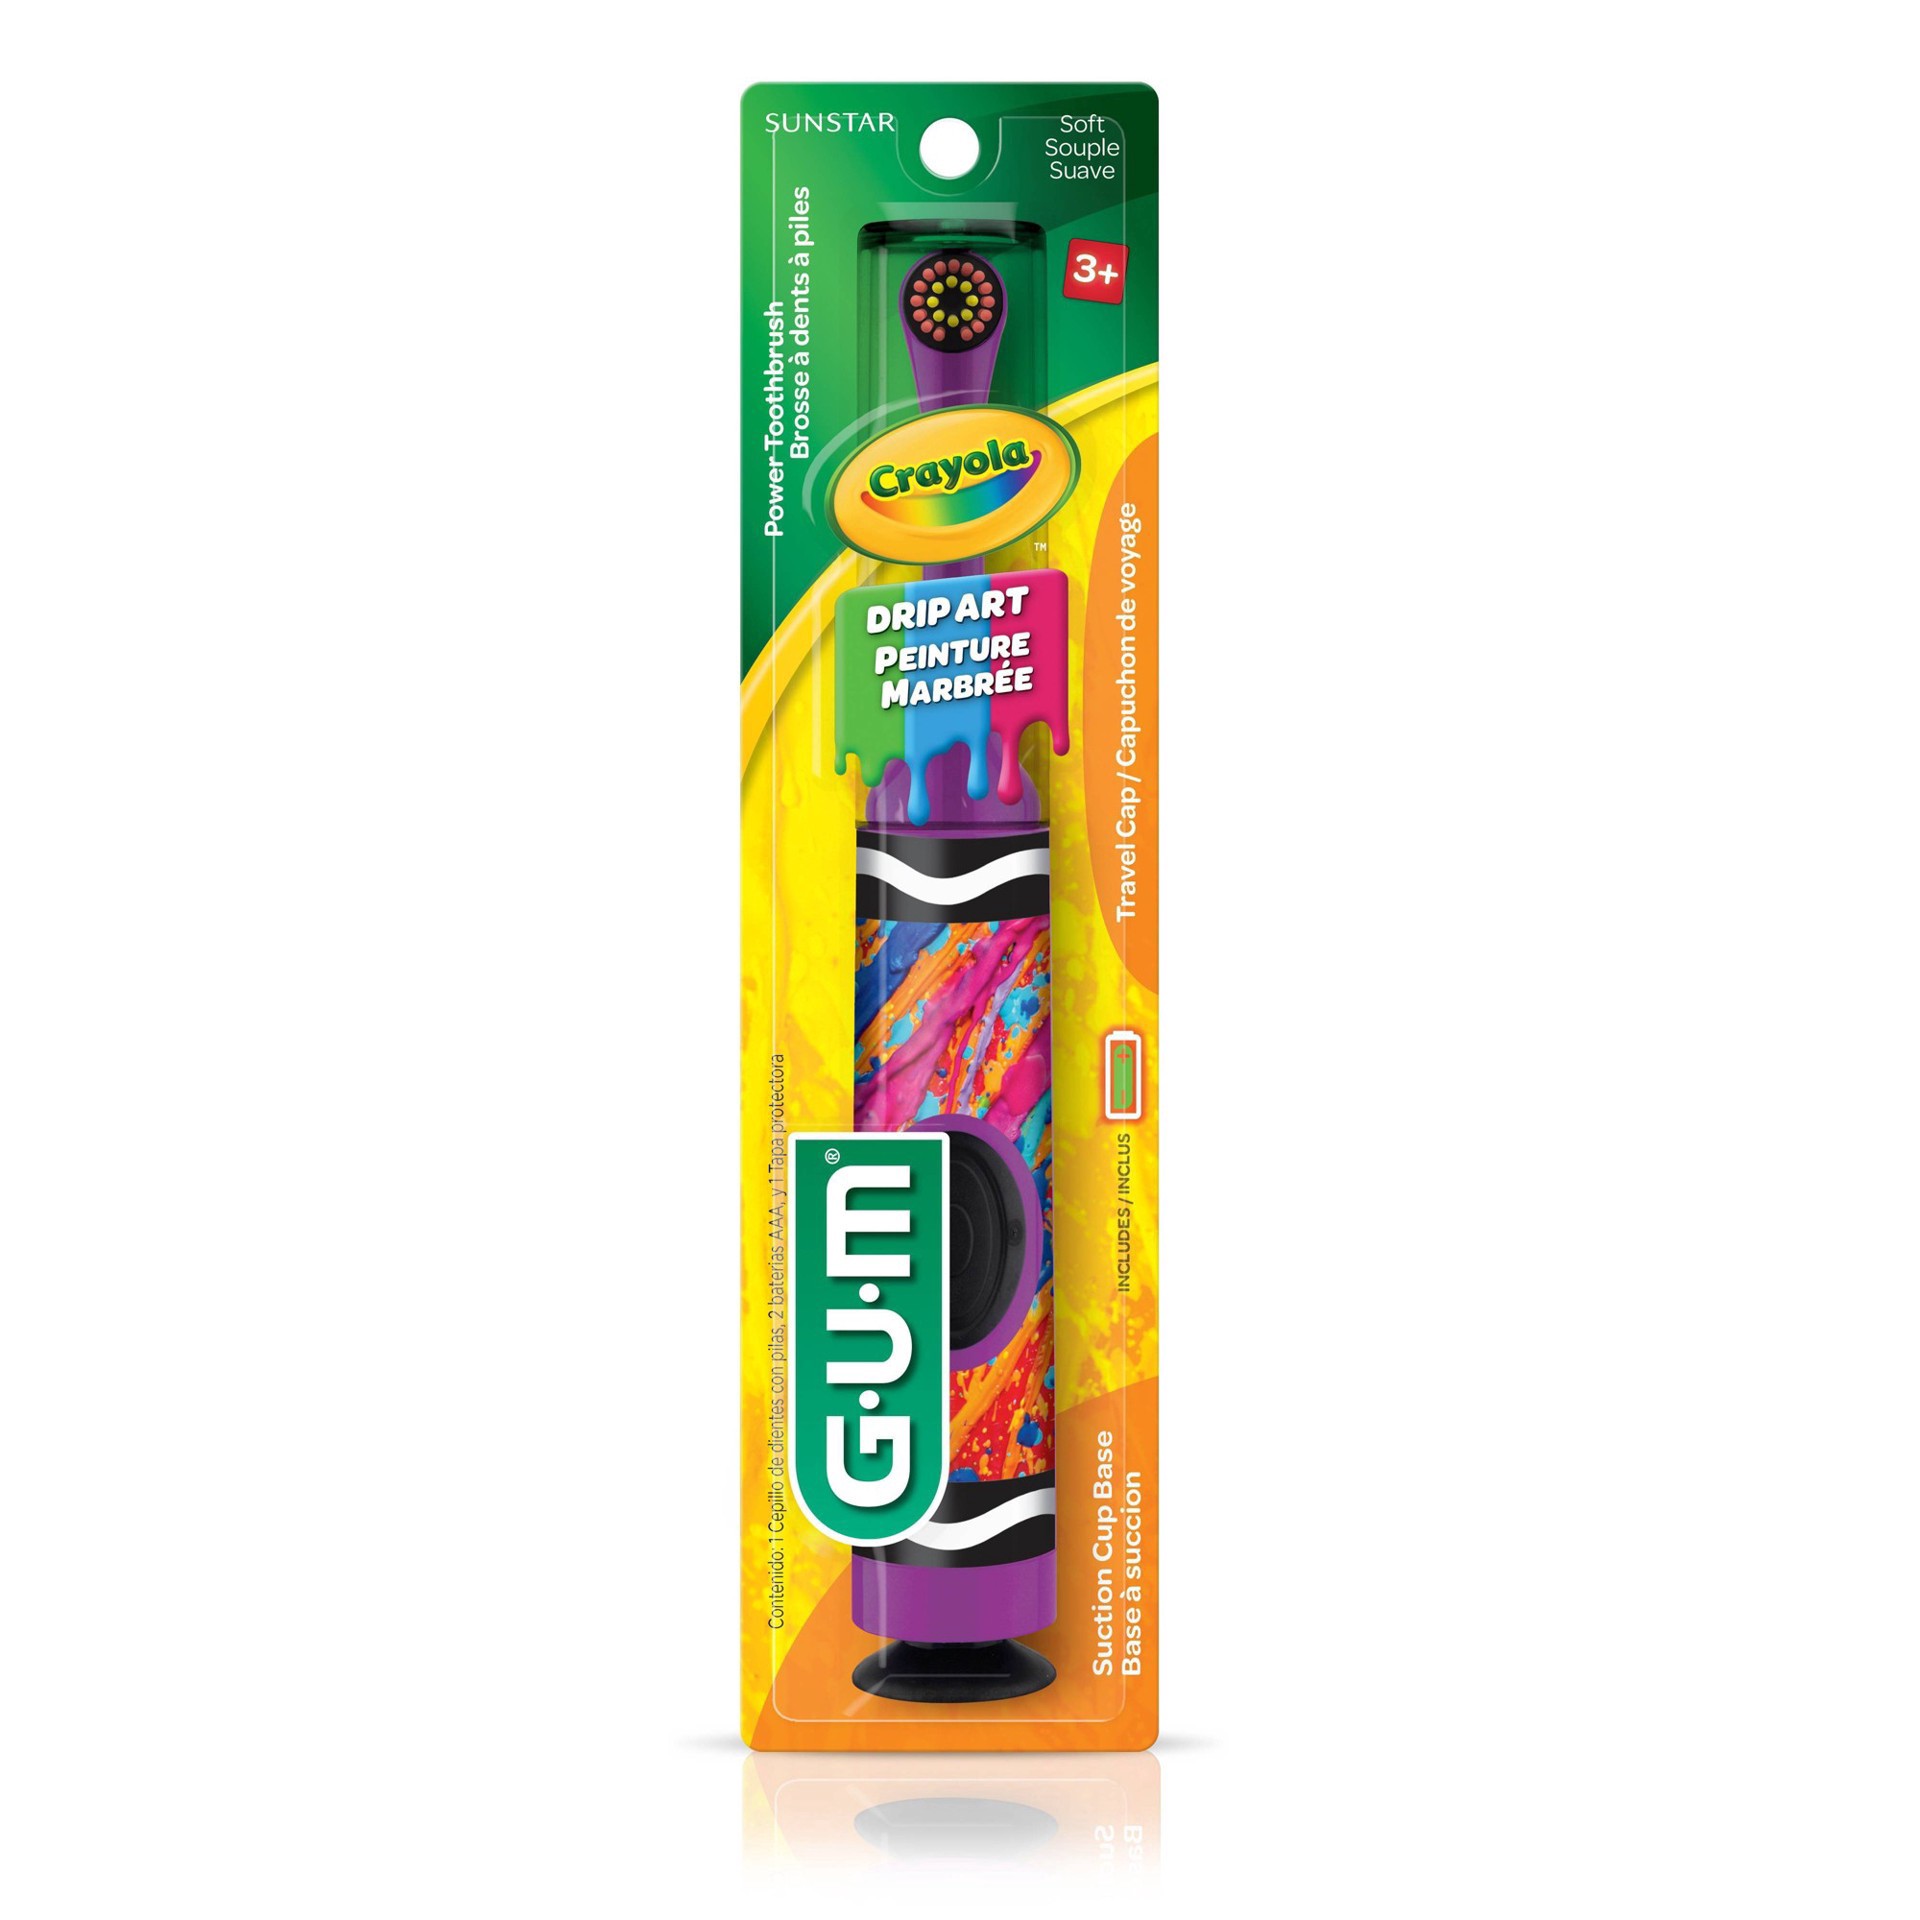 slide 12 of 50, G-U-M Crayola Electric Toothbrush, 1 ct